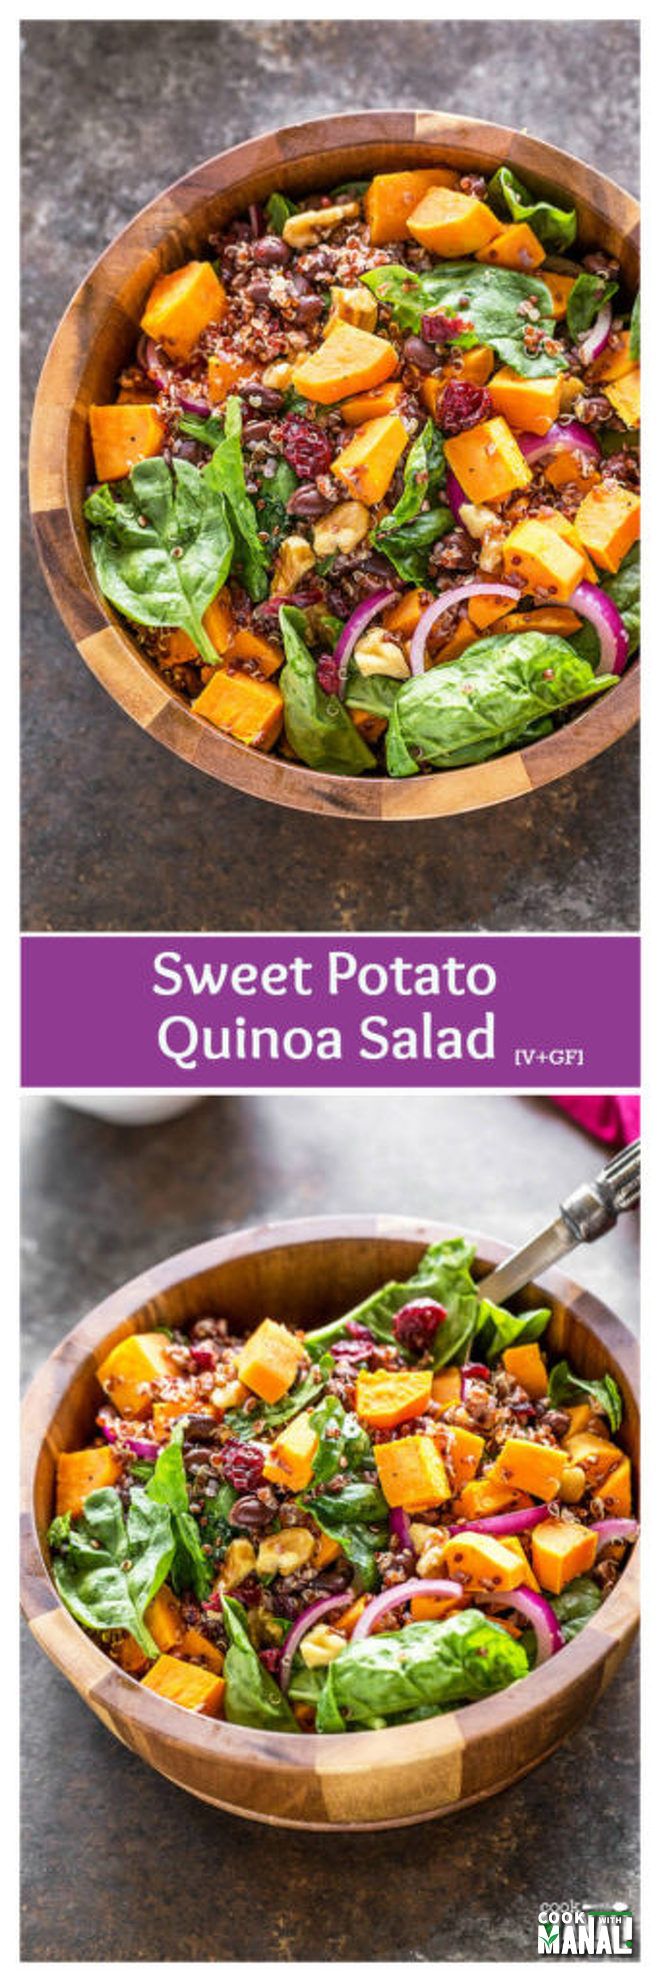 Sweet Potato Quinoa Salad - Cook With Manali